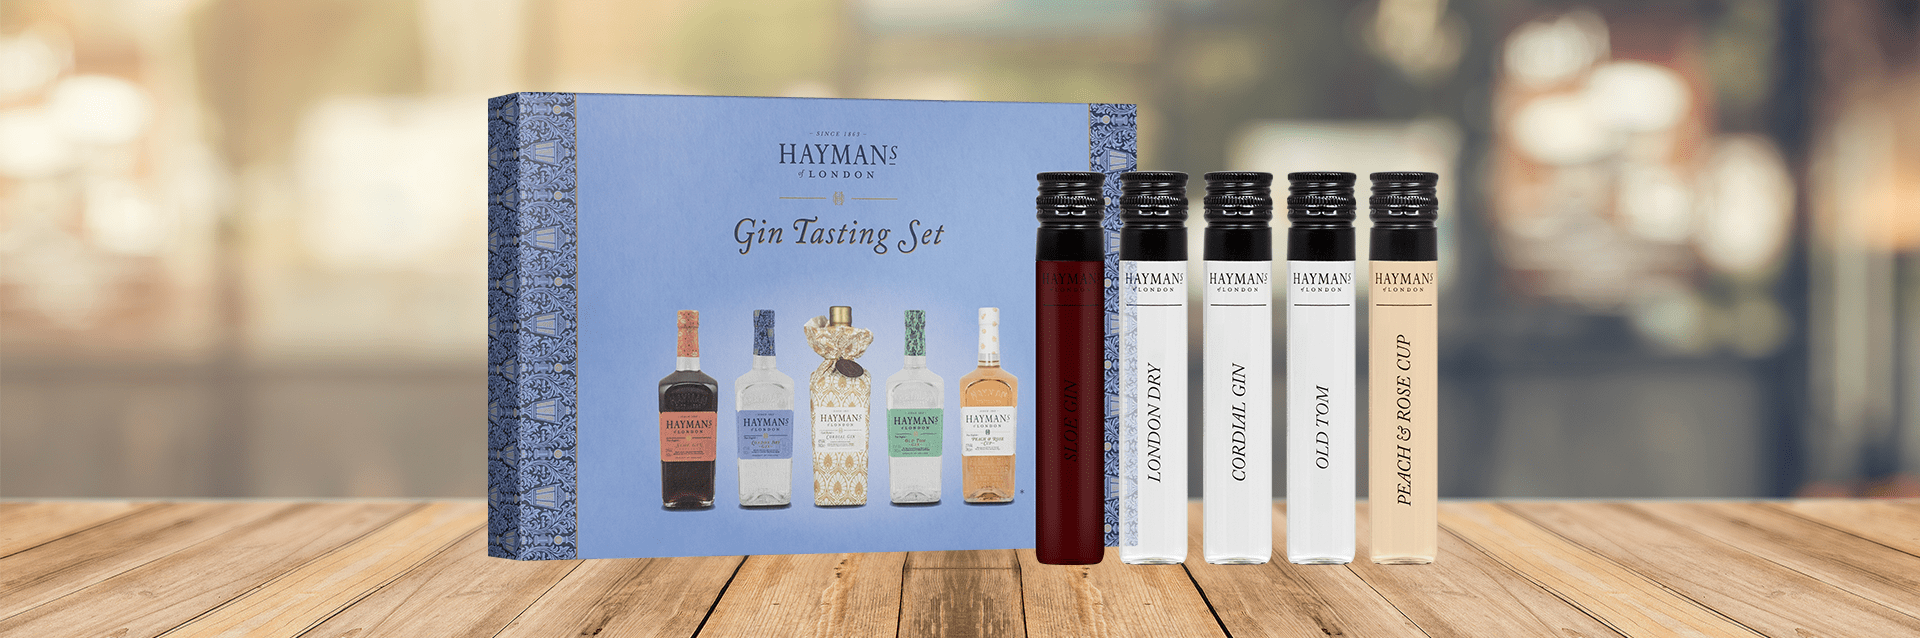 Hayman's Gin Tasting Set - Sierra Madre